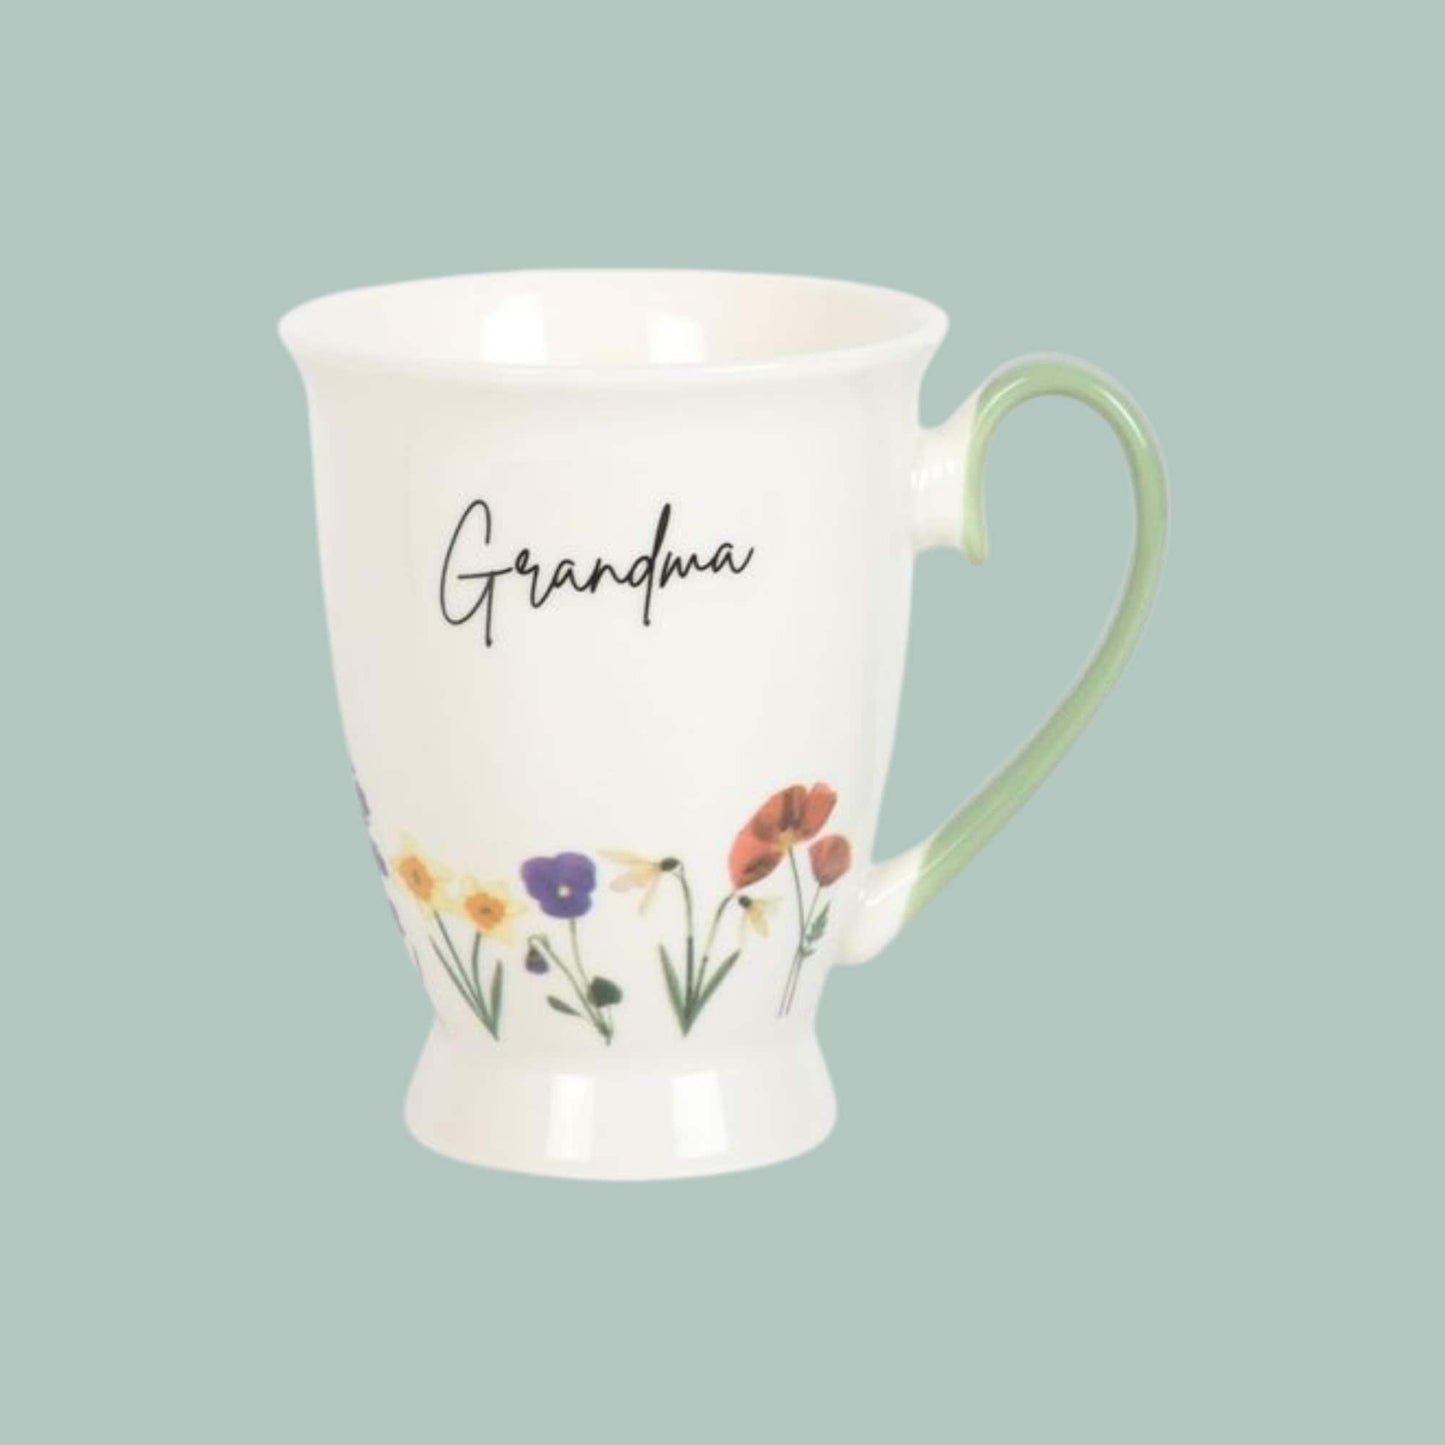 Grandma Wildflower Pedestal Mug Special Grandma Mug Hot Beverage Cup Present For Gran Hot Chocolate Tea Coffee Lovely Gift From Grandchild